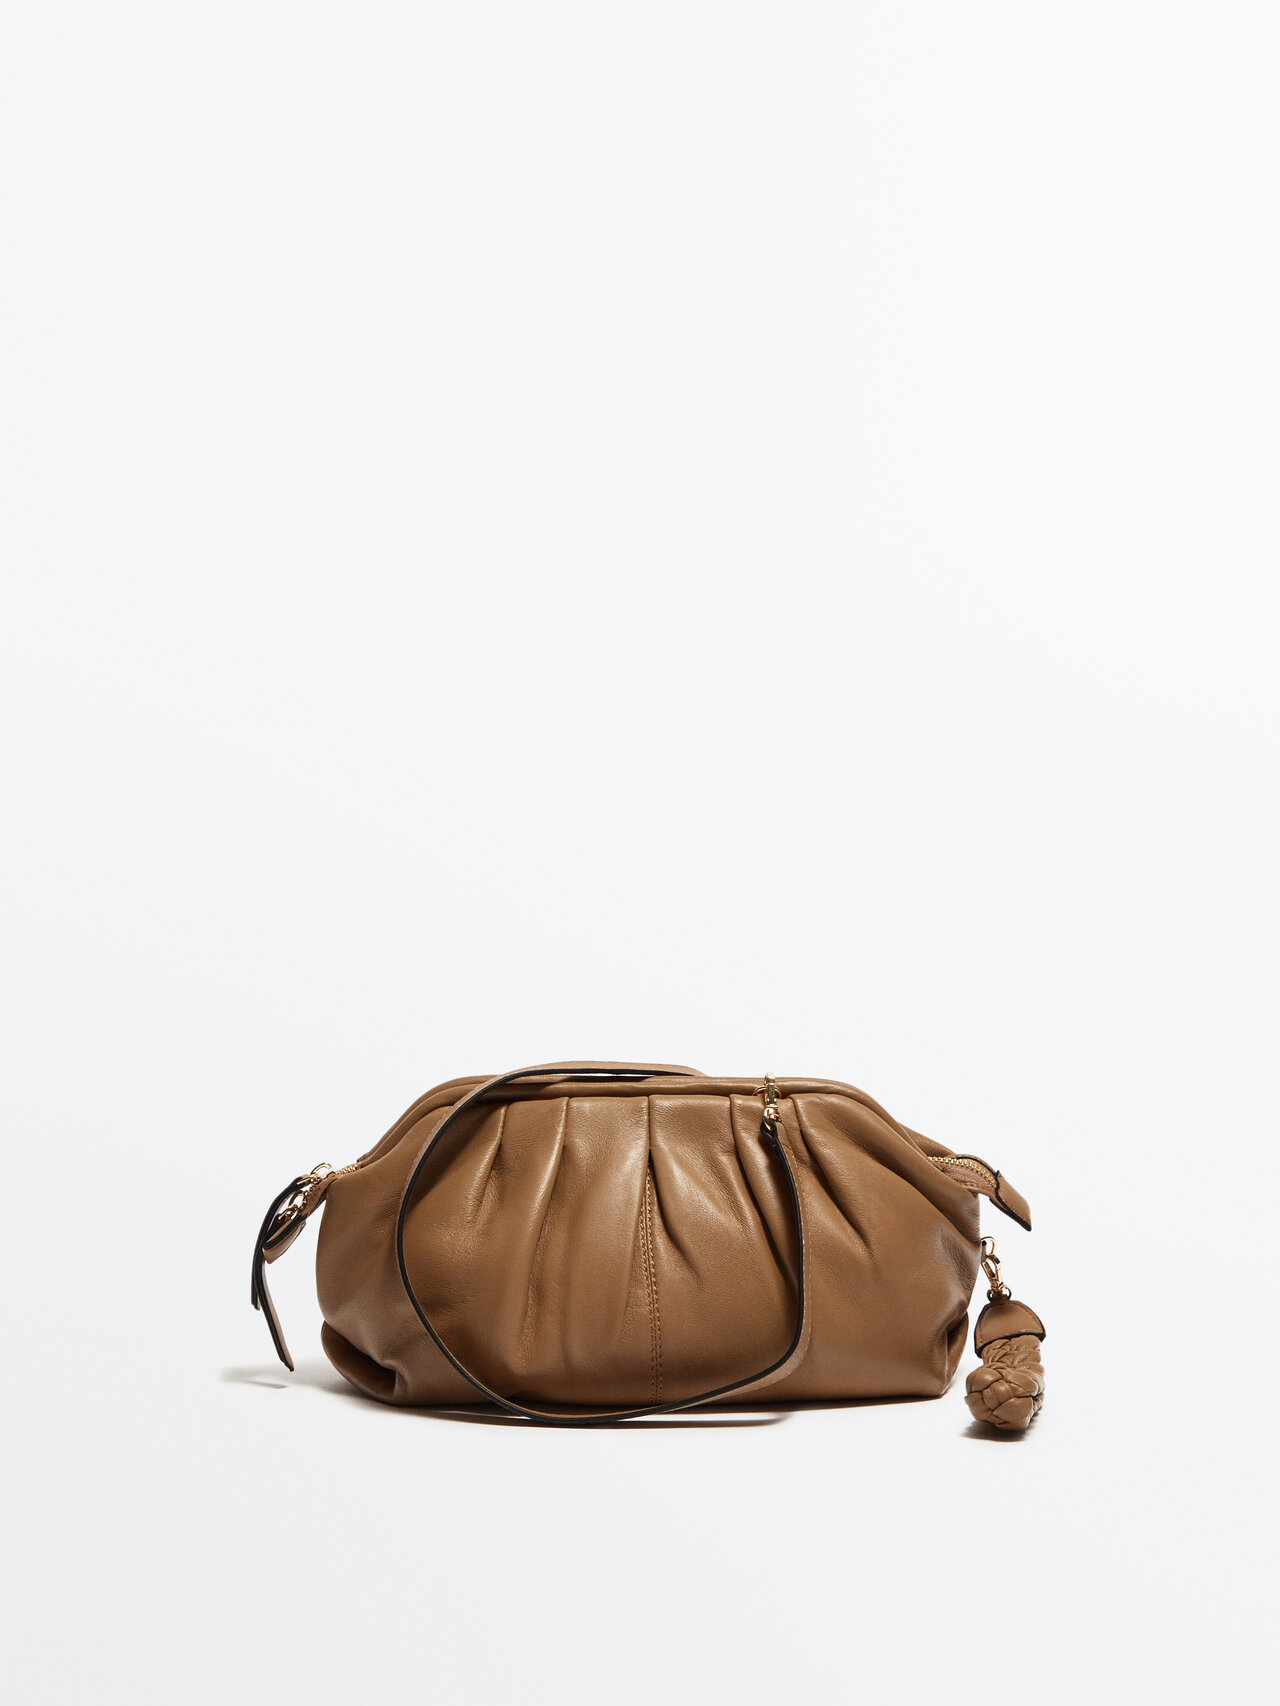 Massimo Dutti Gathered Leather Bag - Studio In Brown